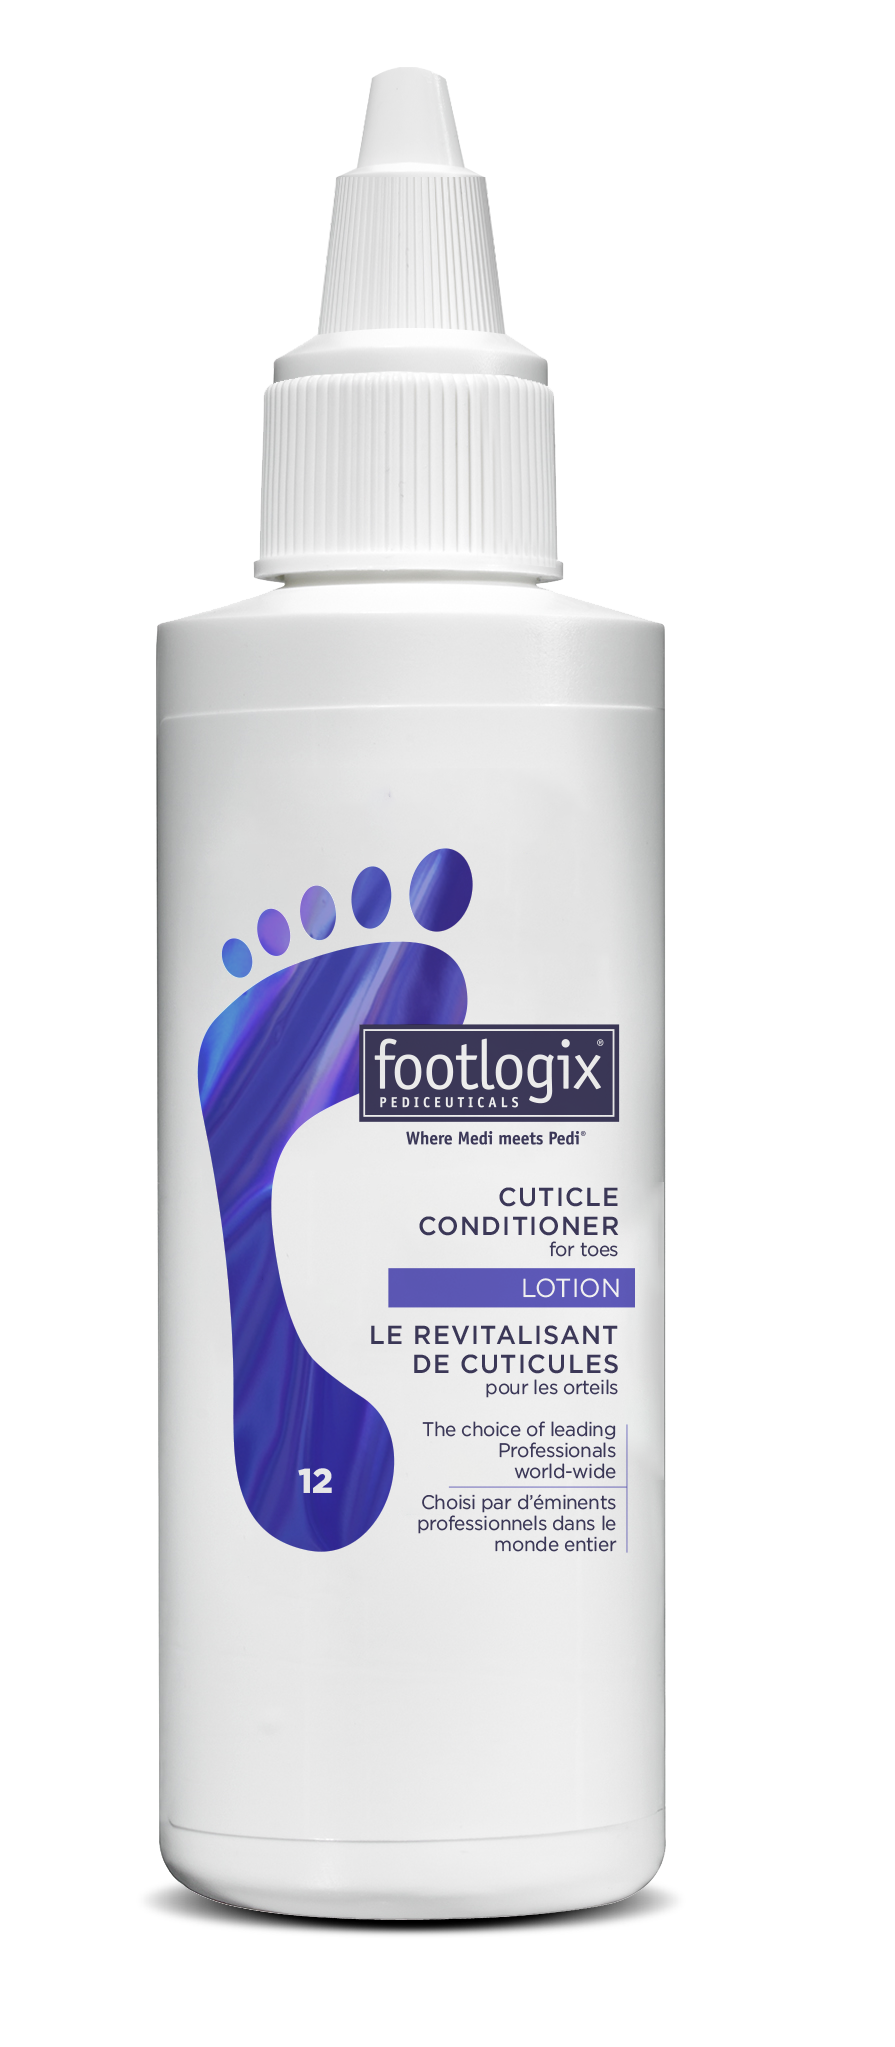 Footlogix Cuticle Conditioner (12)